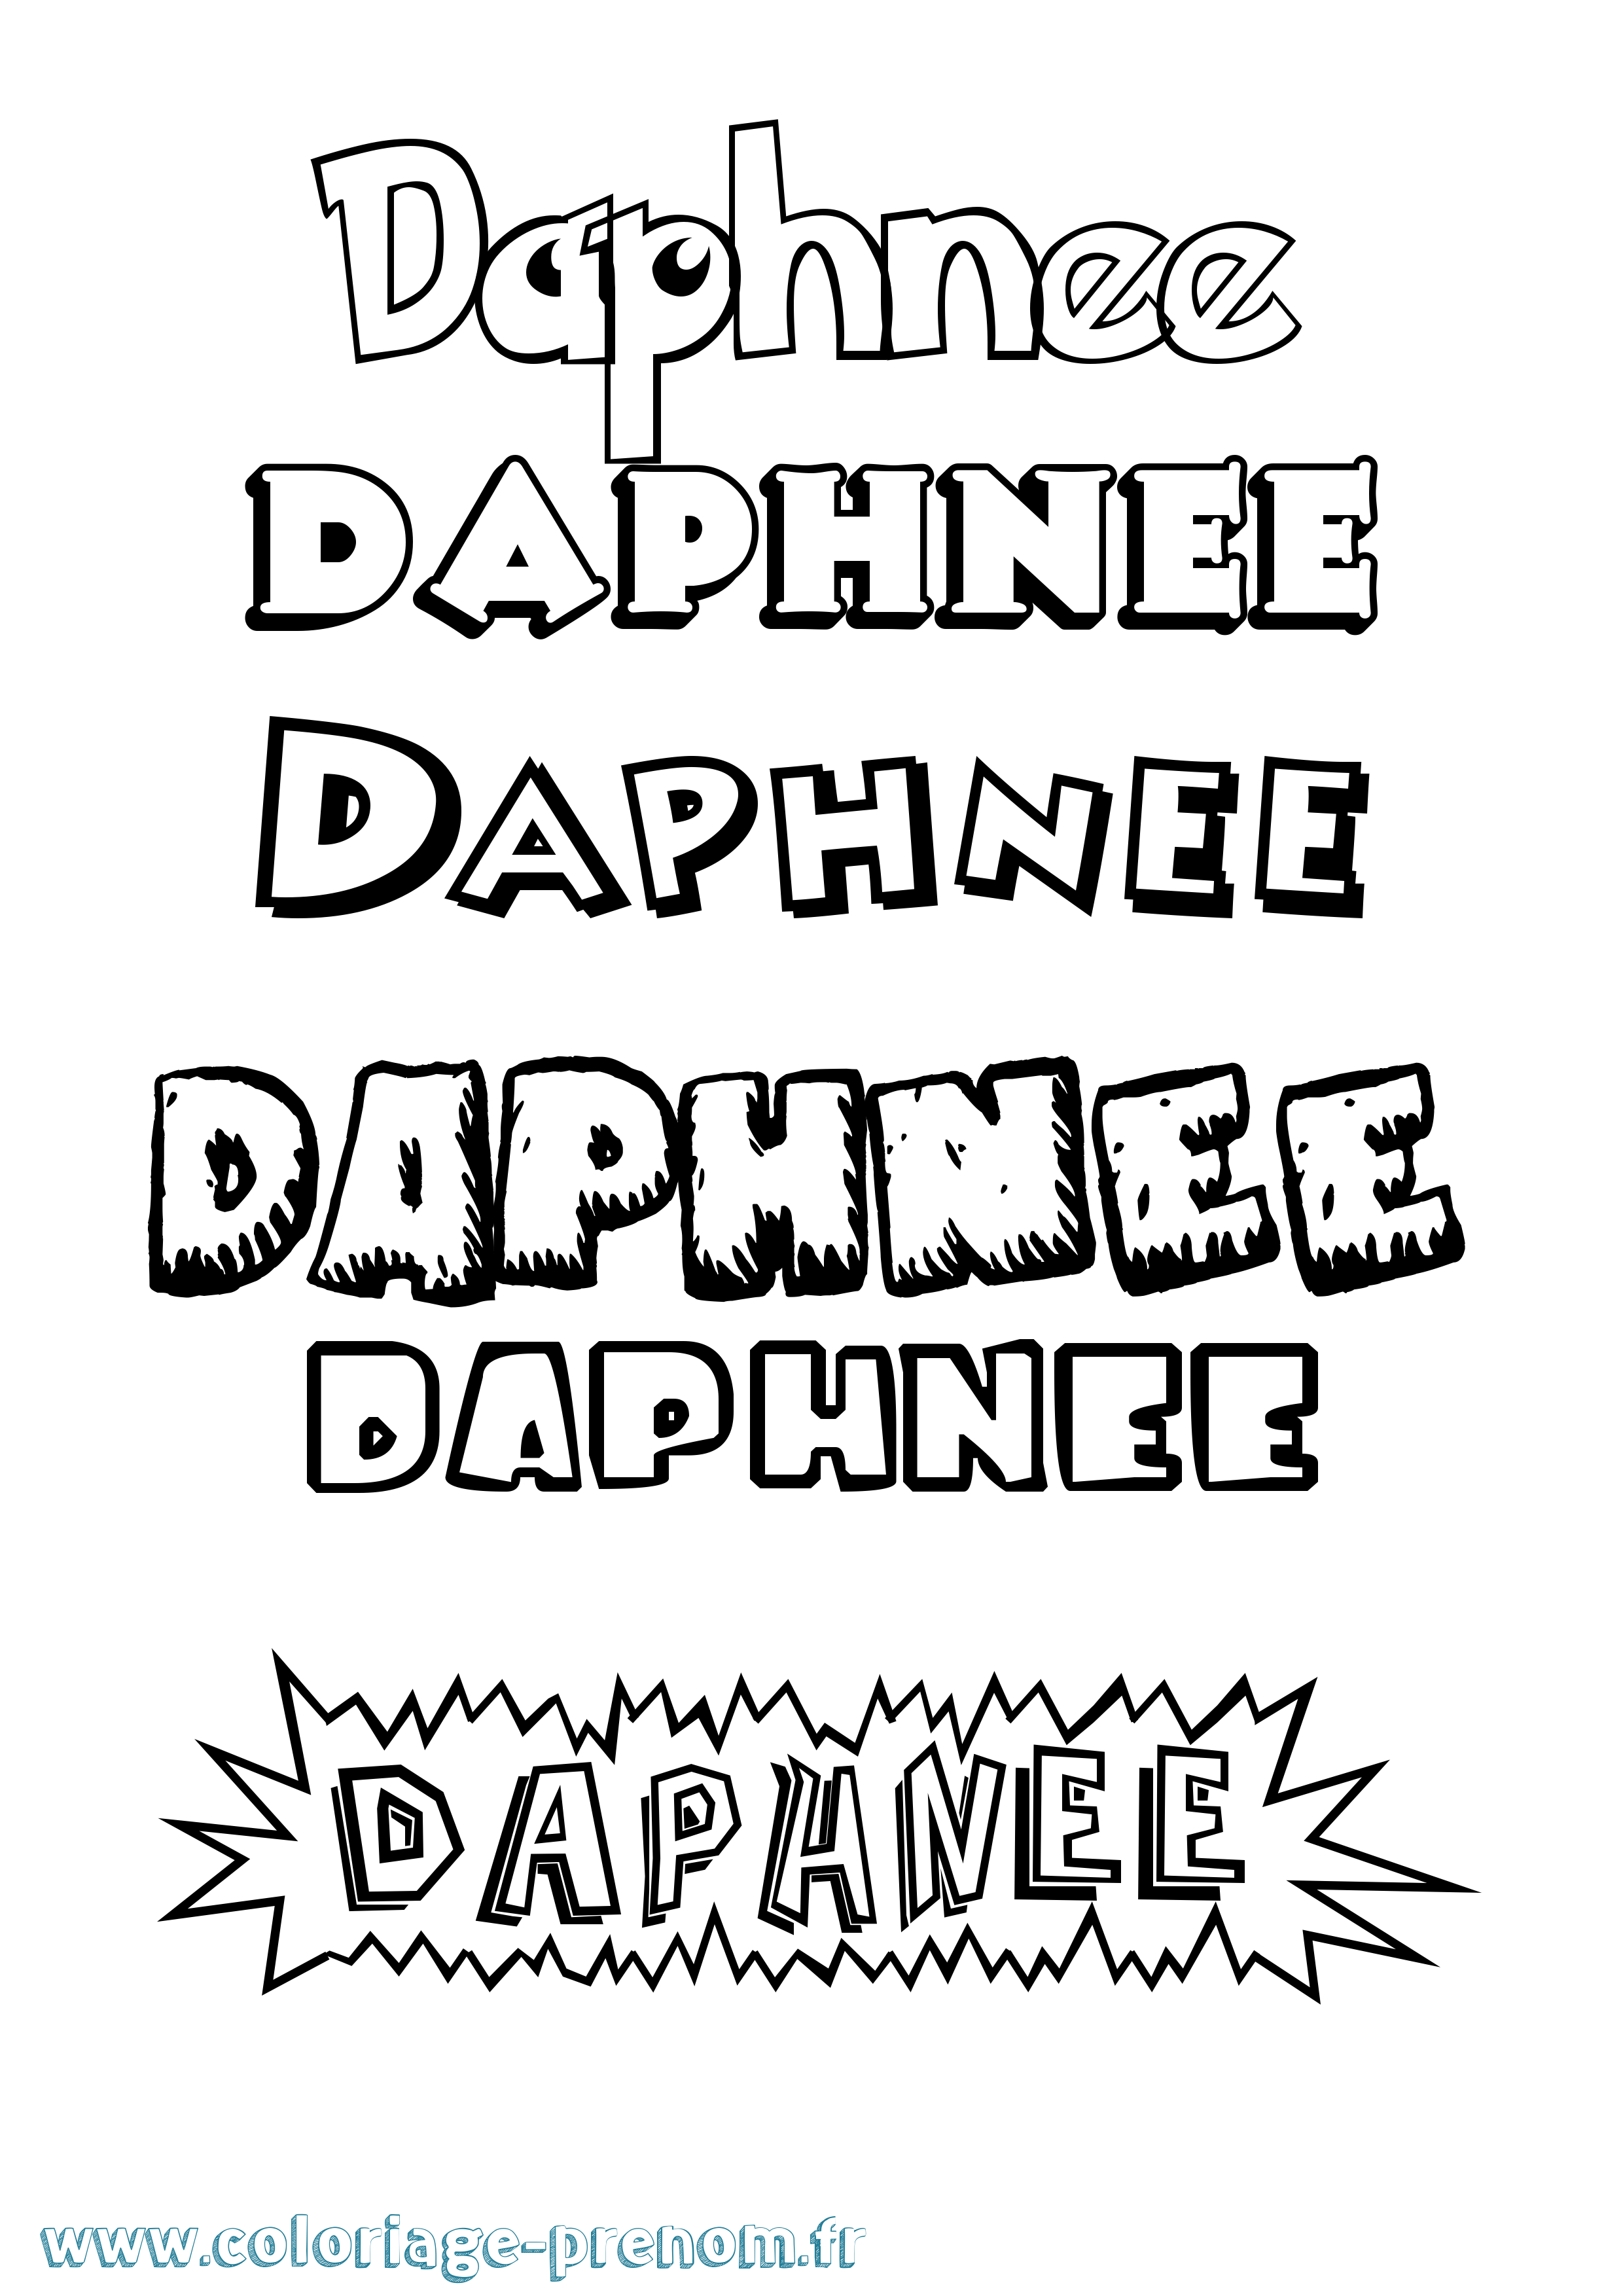 Coloriage prénom Daphnee